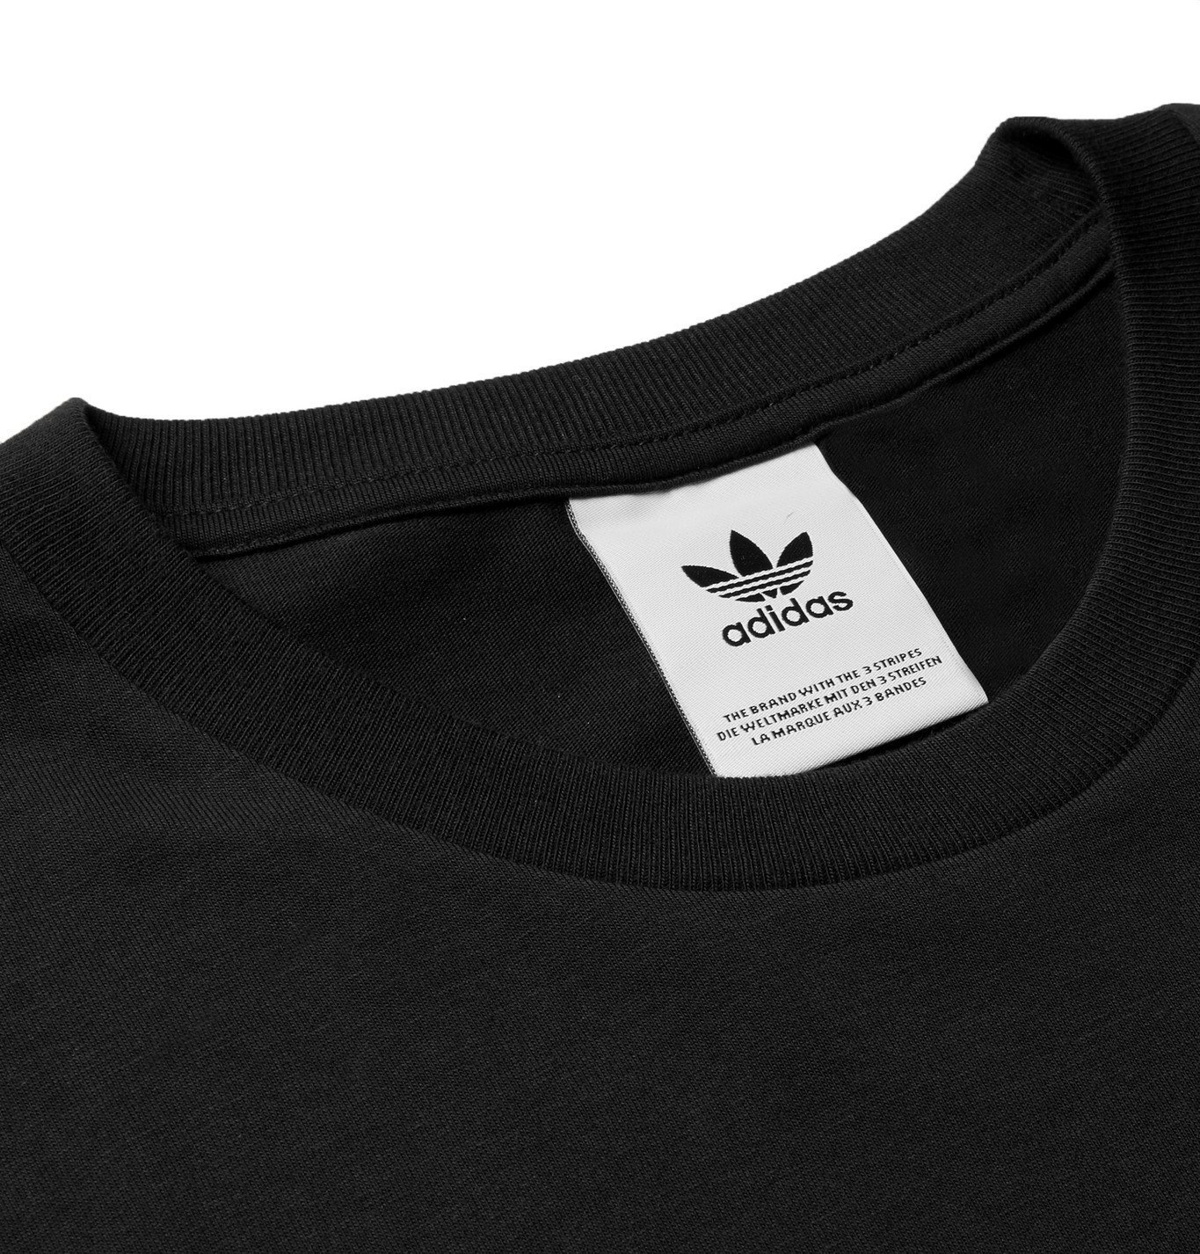 Alexander T-Shirt - Originals adidas Black Logo-Embroidered Wang - Originals adidas Cotton-Jersey Printed by